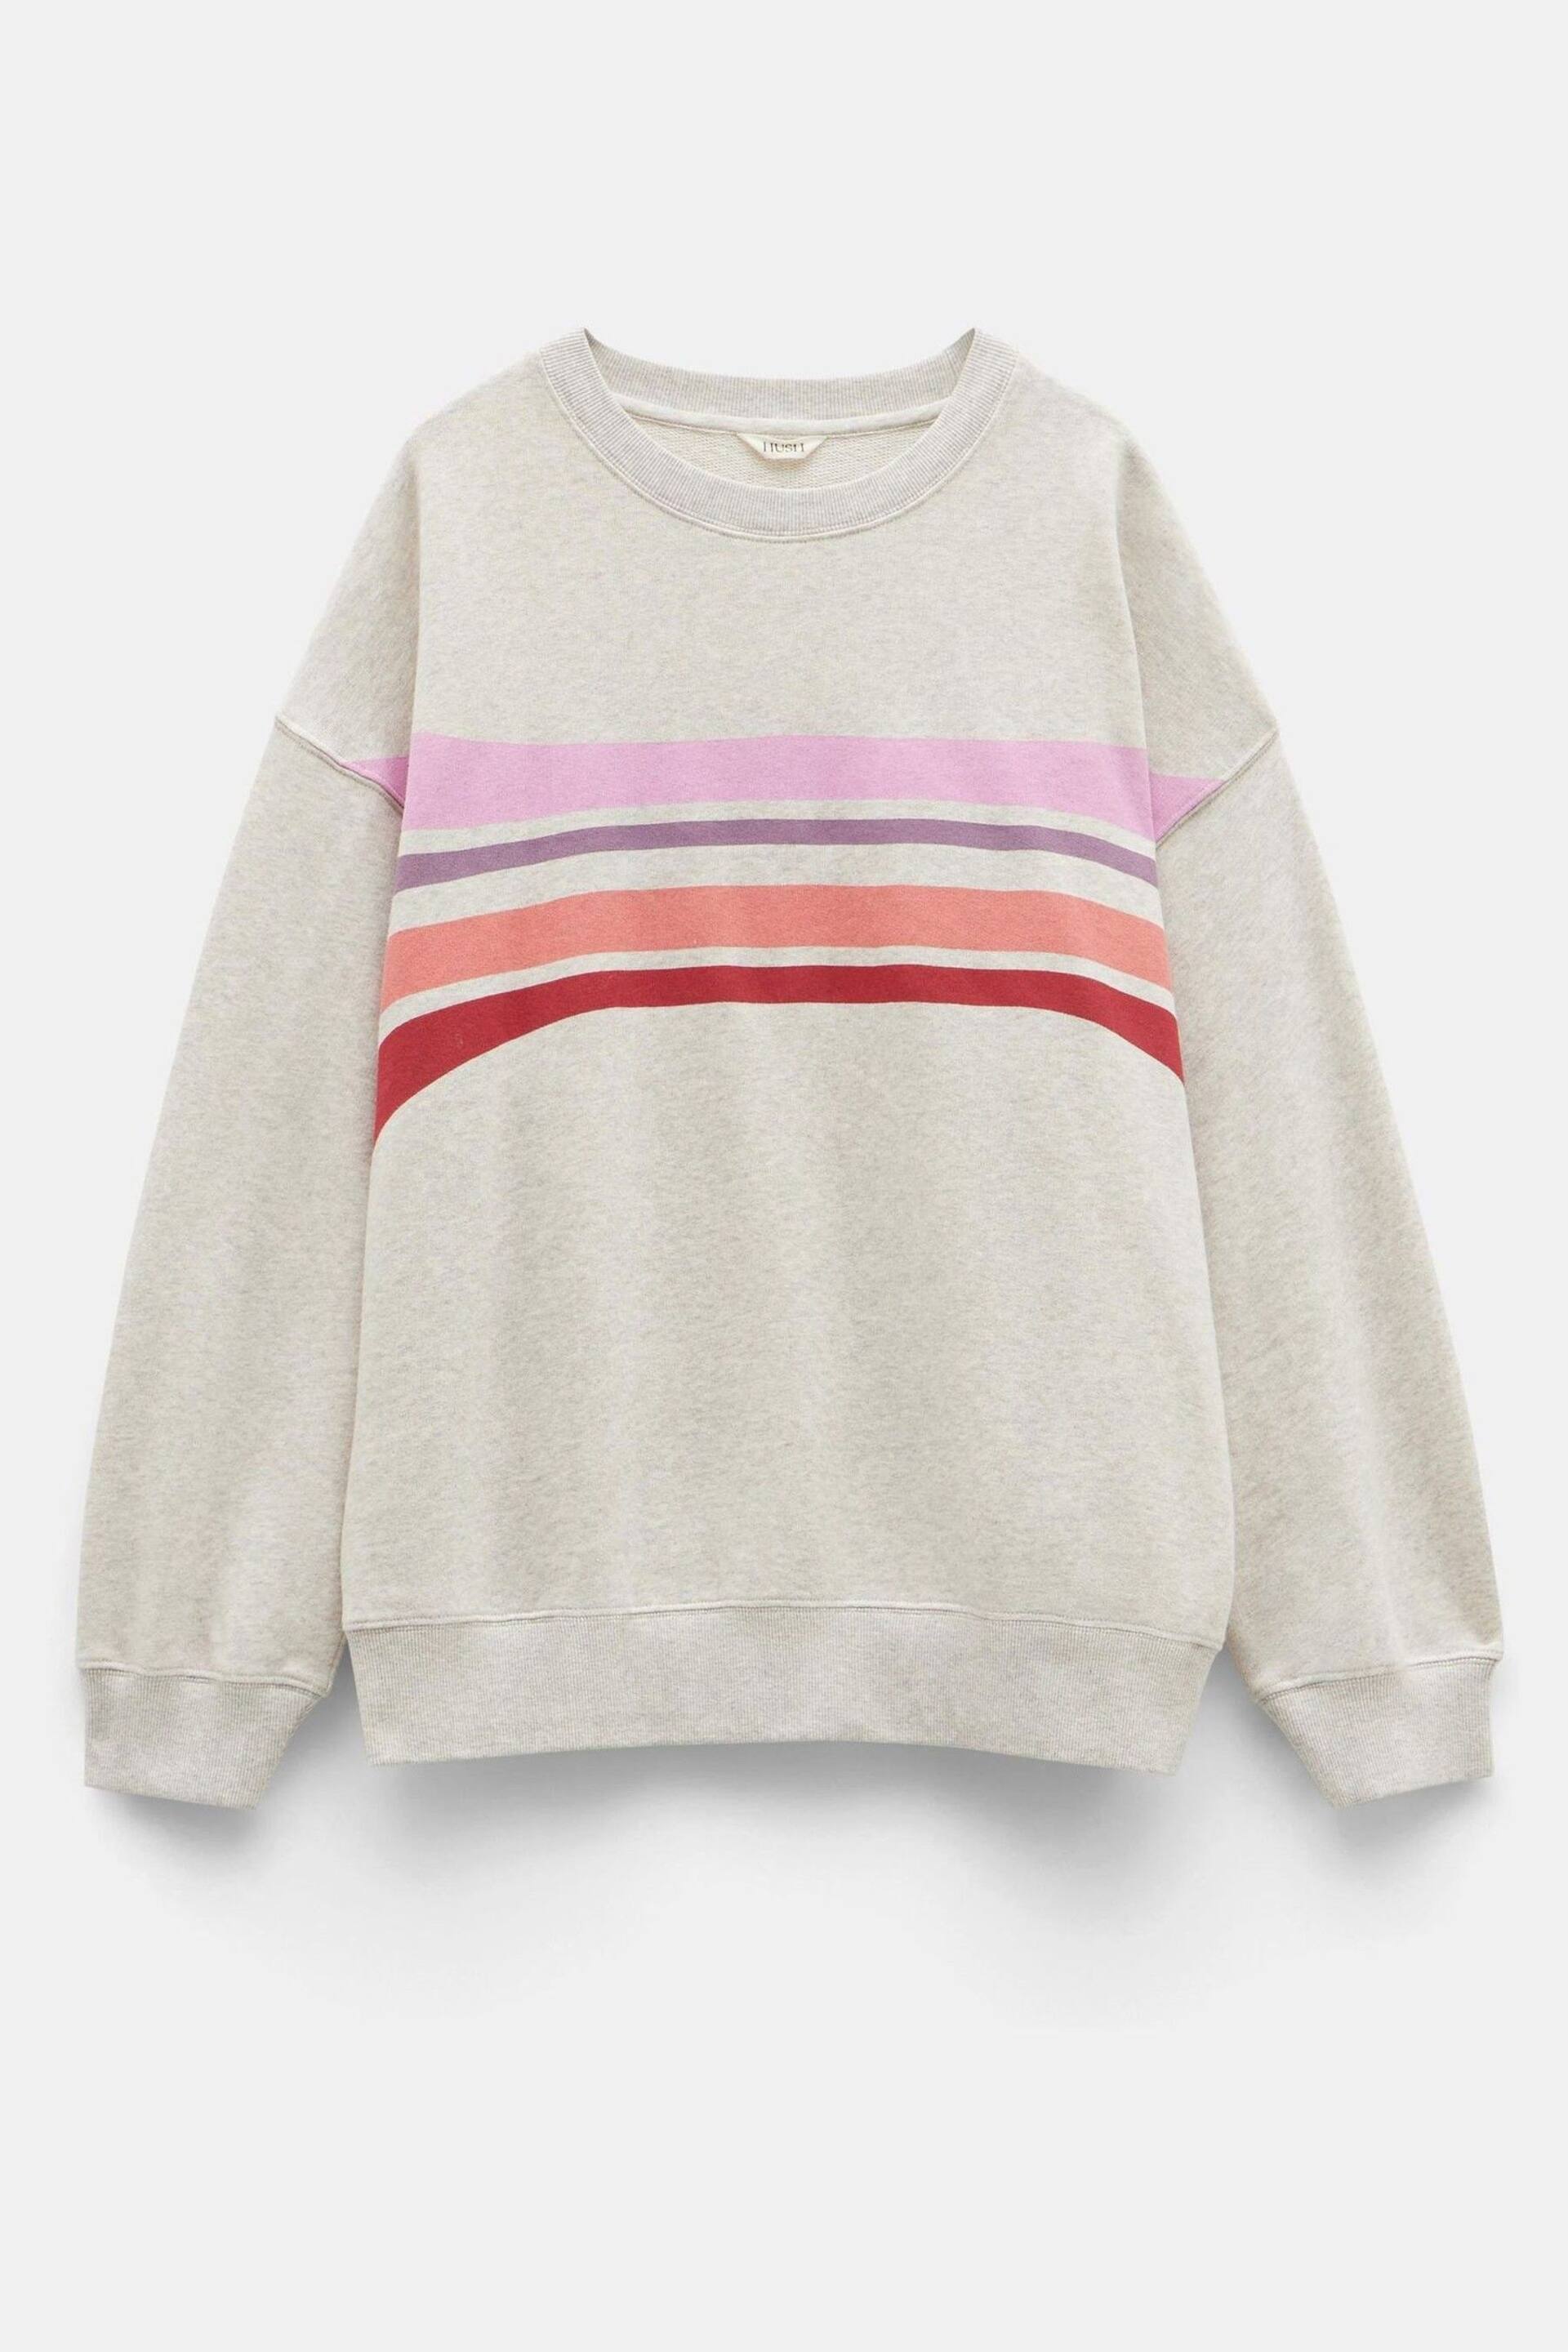 Hush Cream Eden Stripe Oversized Sweatshirt - Image 4 of 4